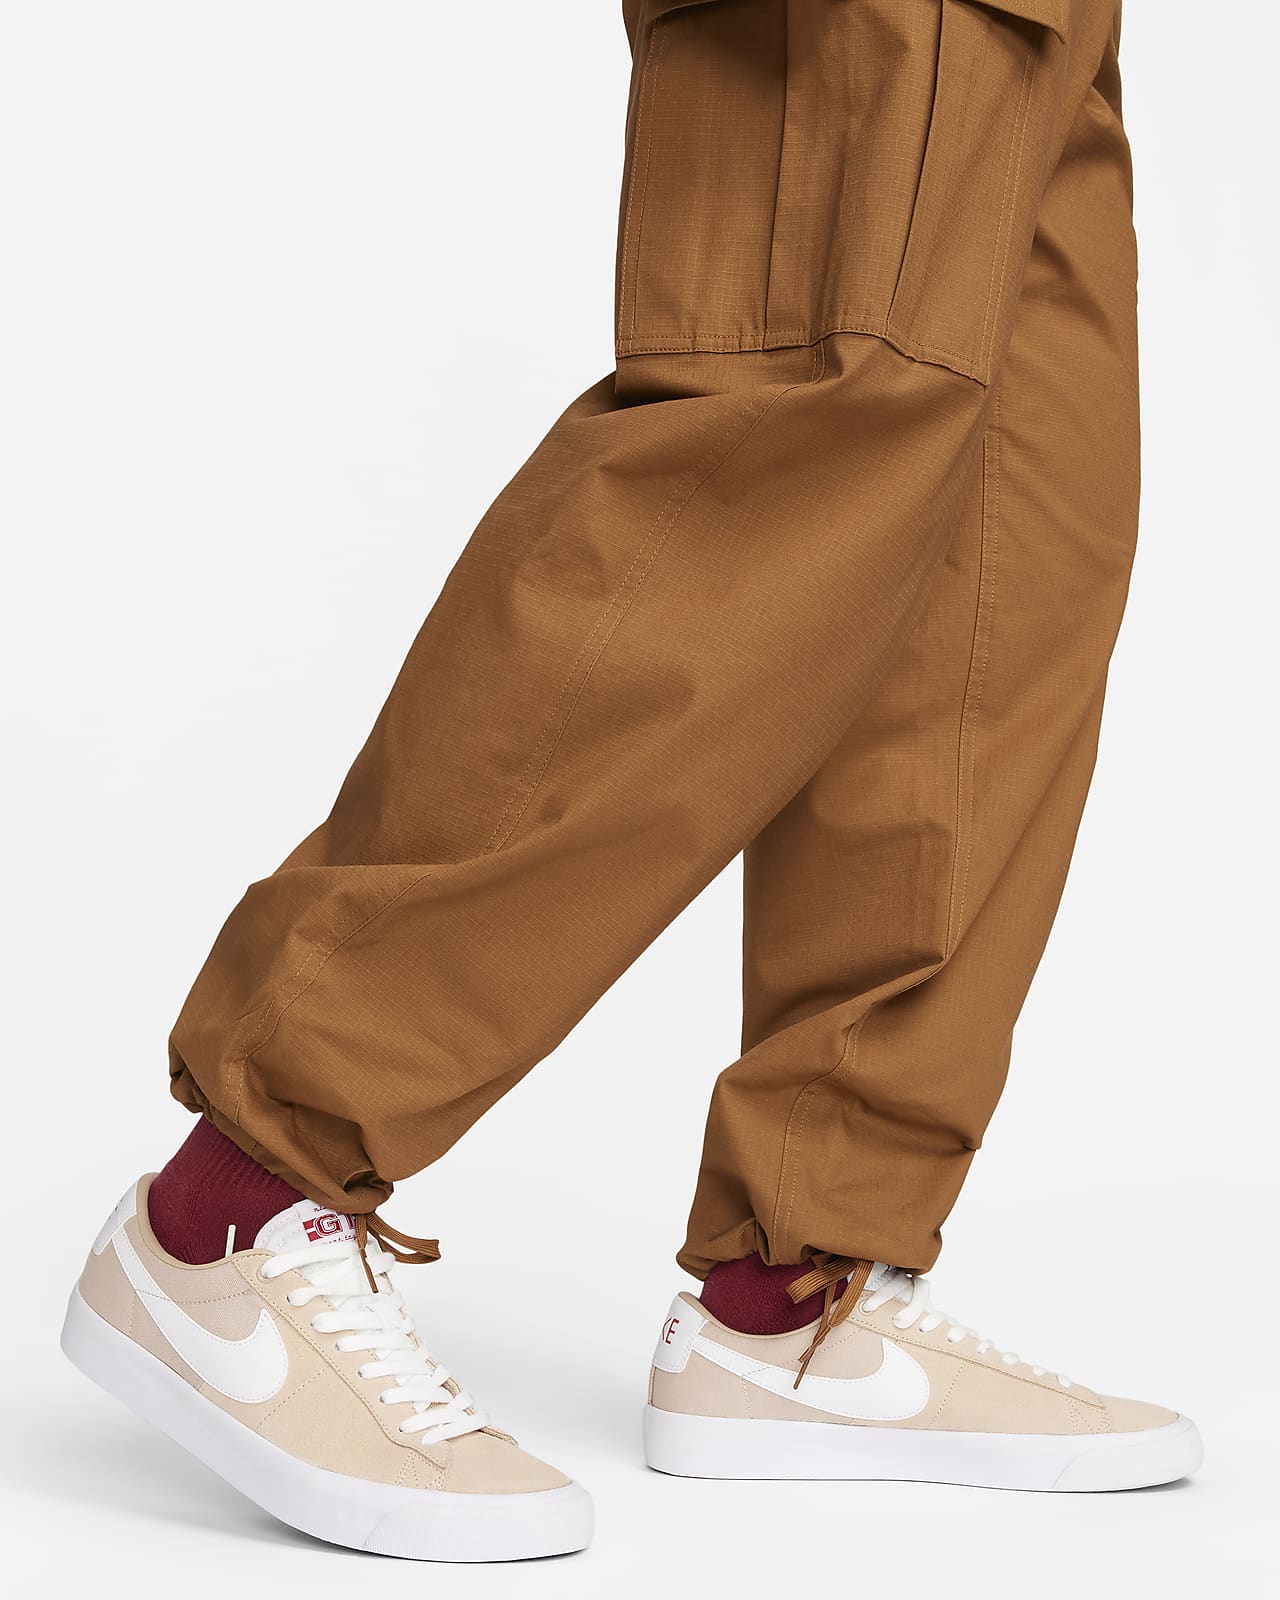 Nike SB Kearny Men's Cargo Skate Pants